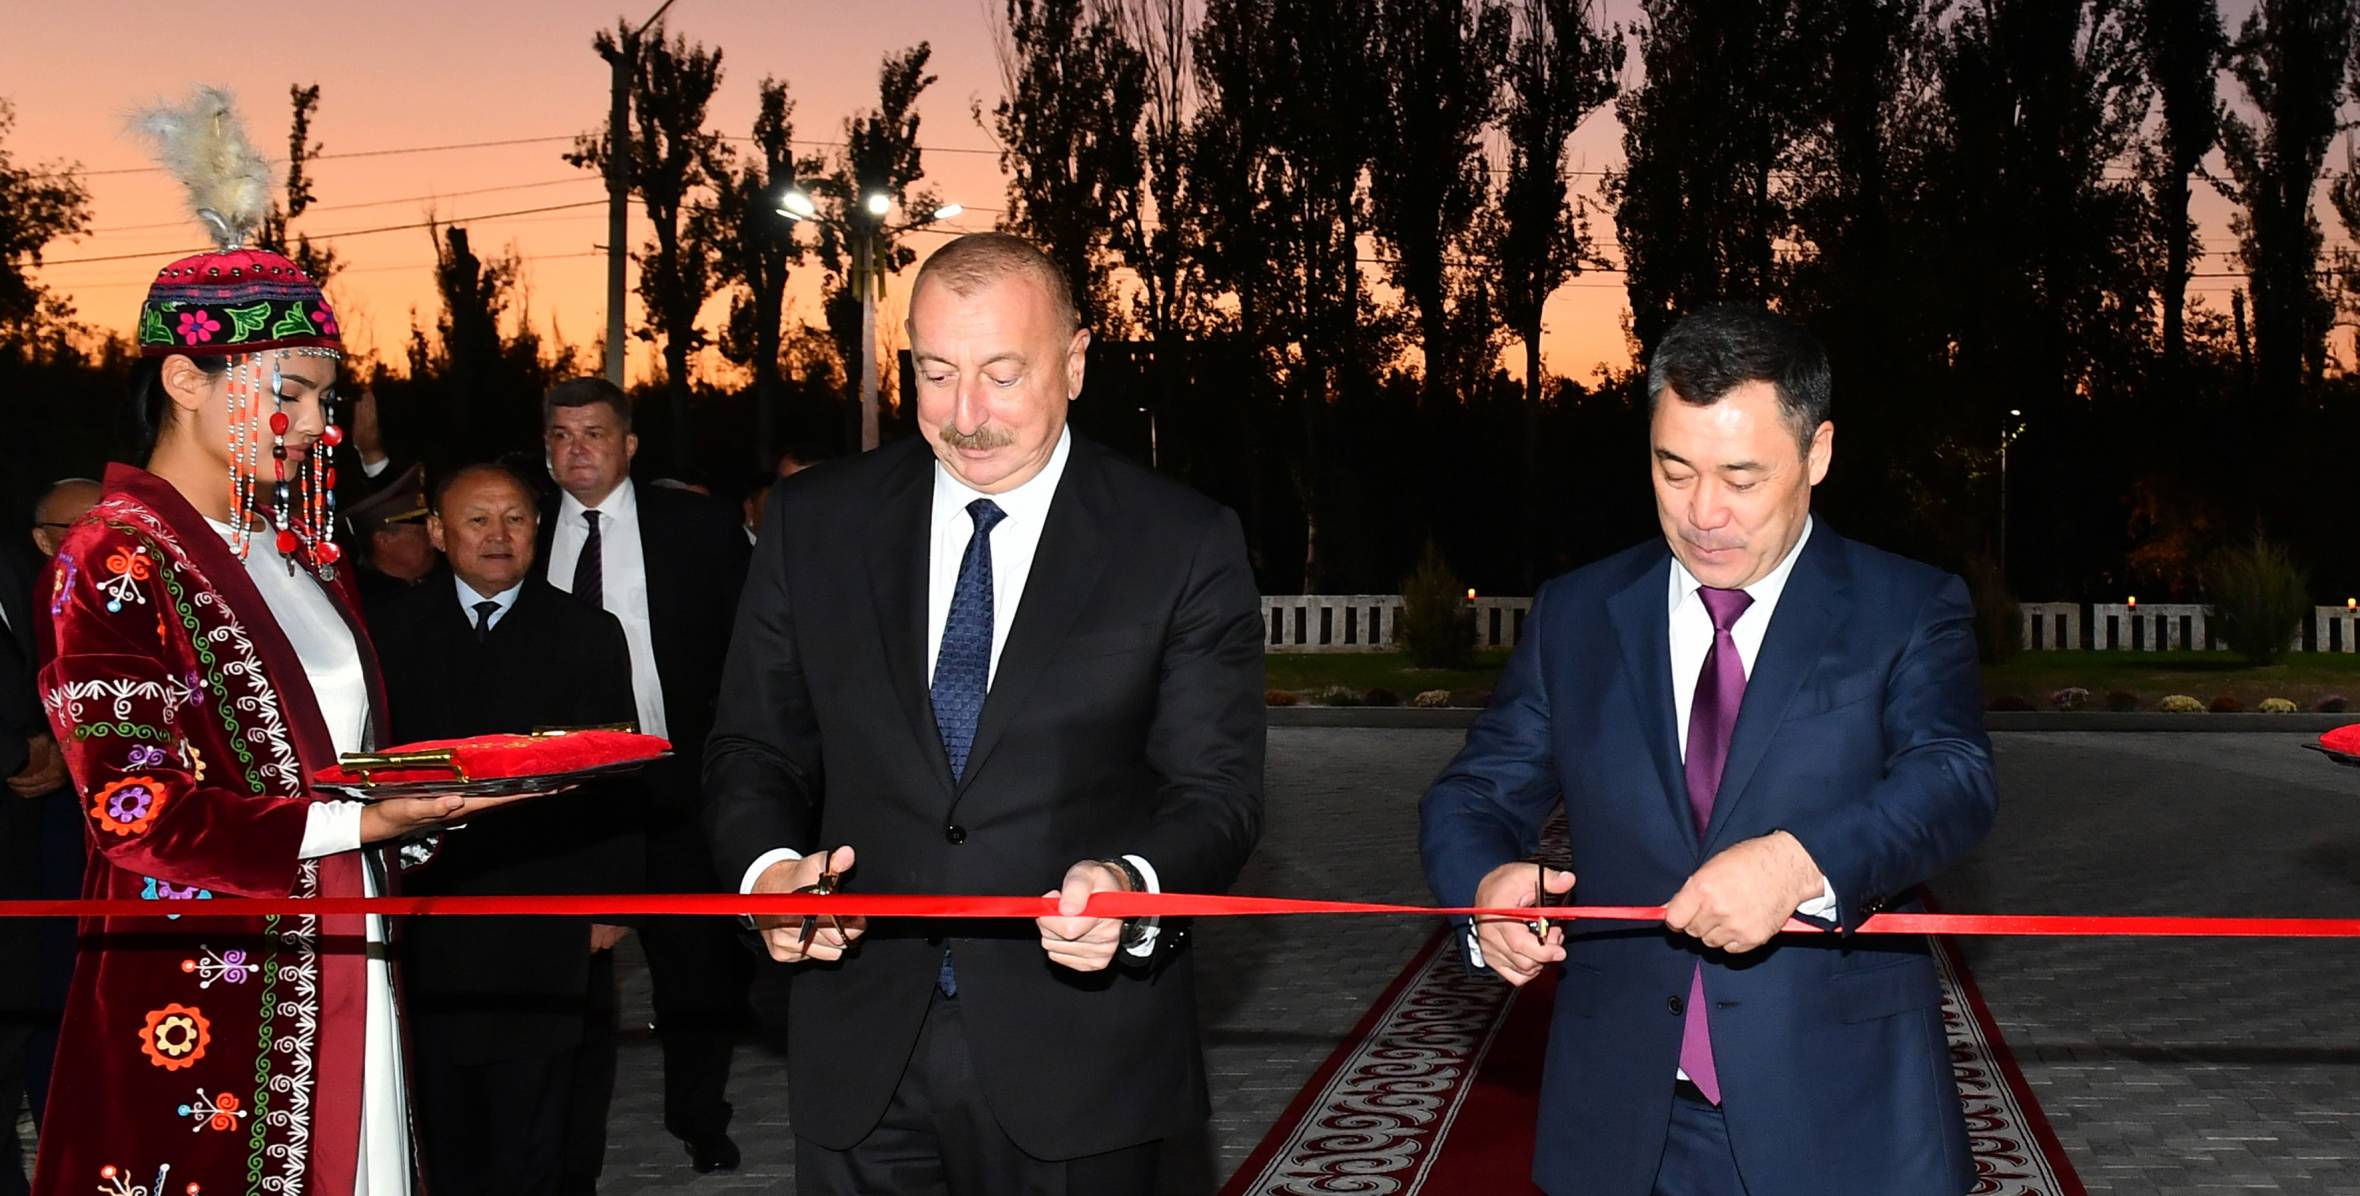 The Kyrgyzstan-Azerbaijan Friendship Park has today opened in Bishkek